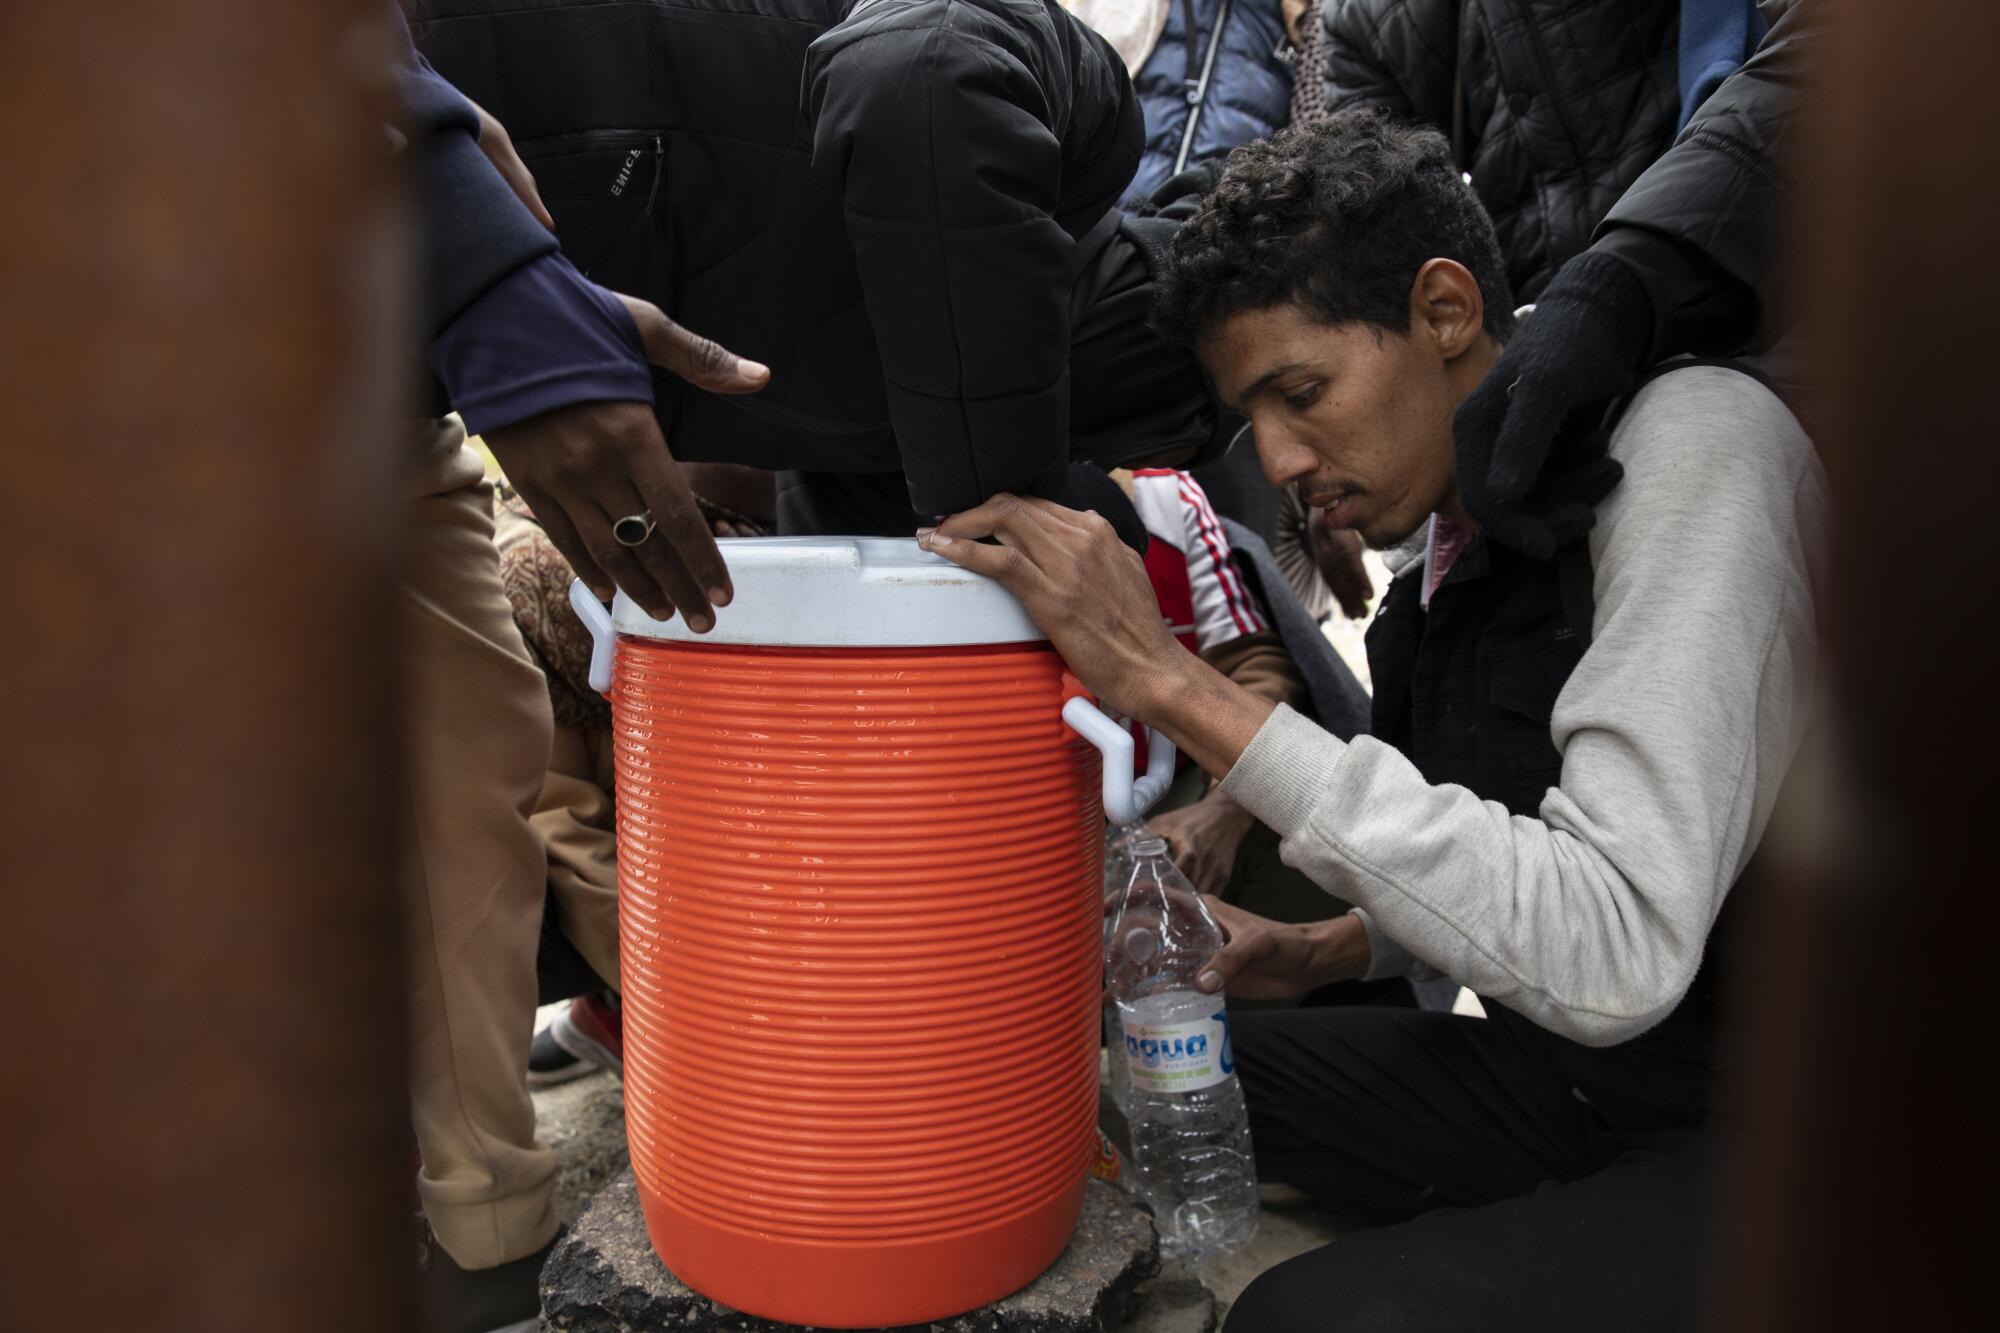 Asylum seeking migrants gather to get water left by U.S. Border Patrol agents